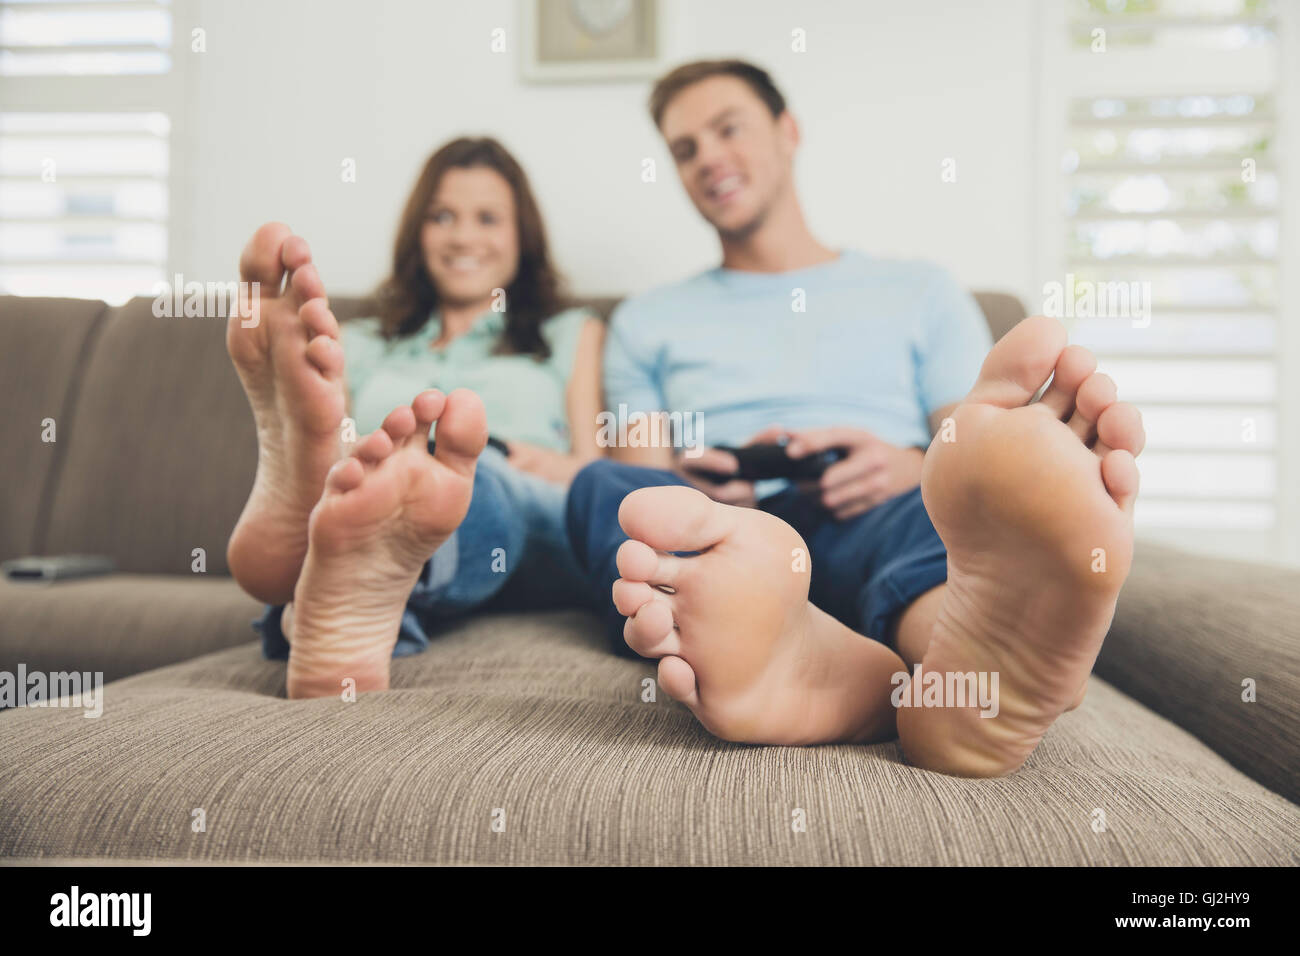 Par descalzo sobre el sofá con video game controller Foto de stock